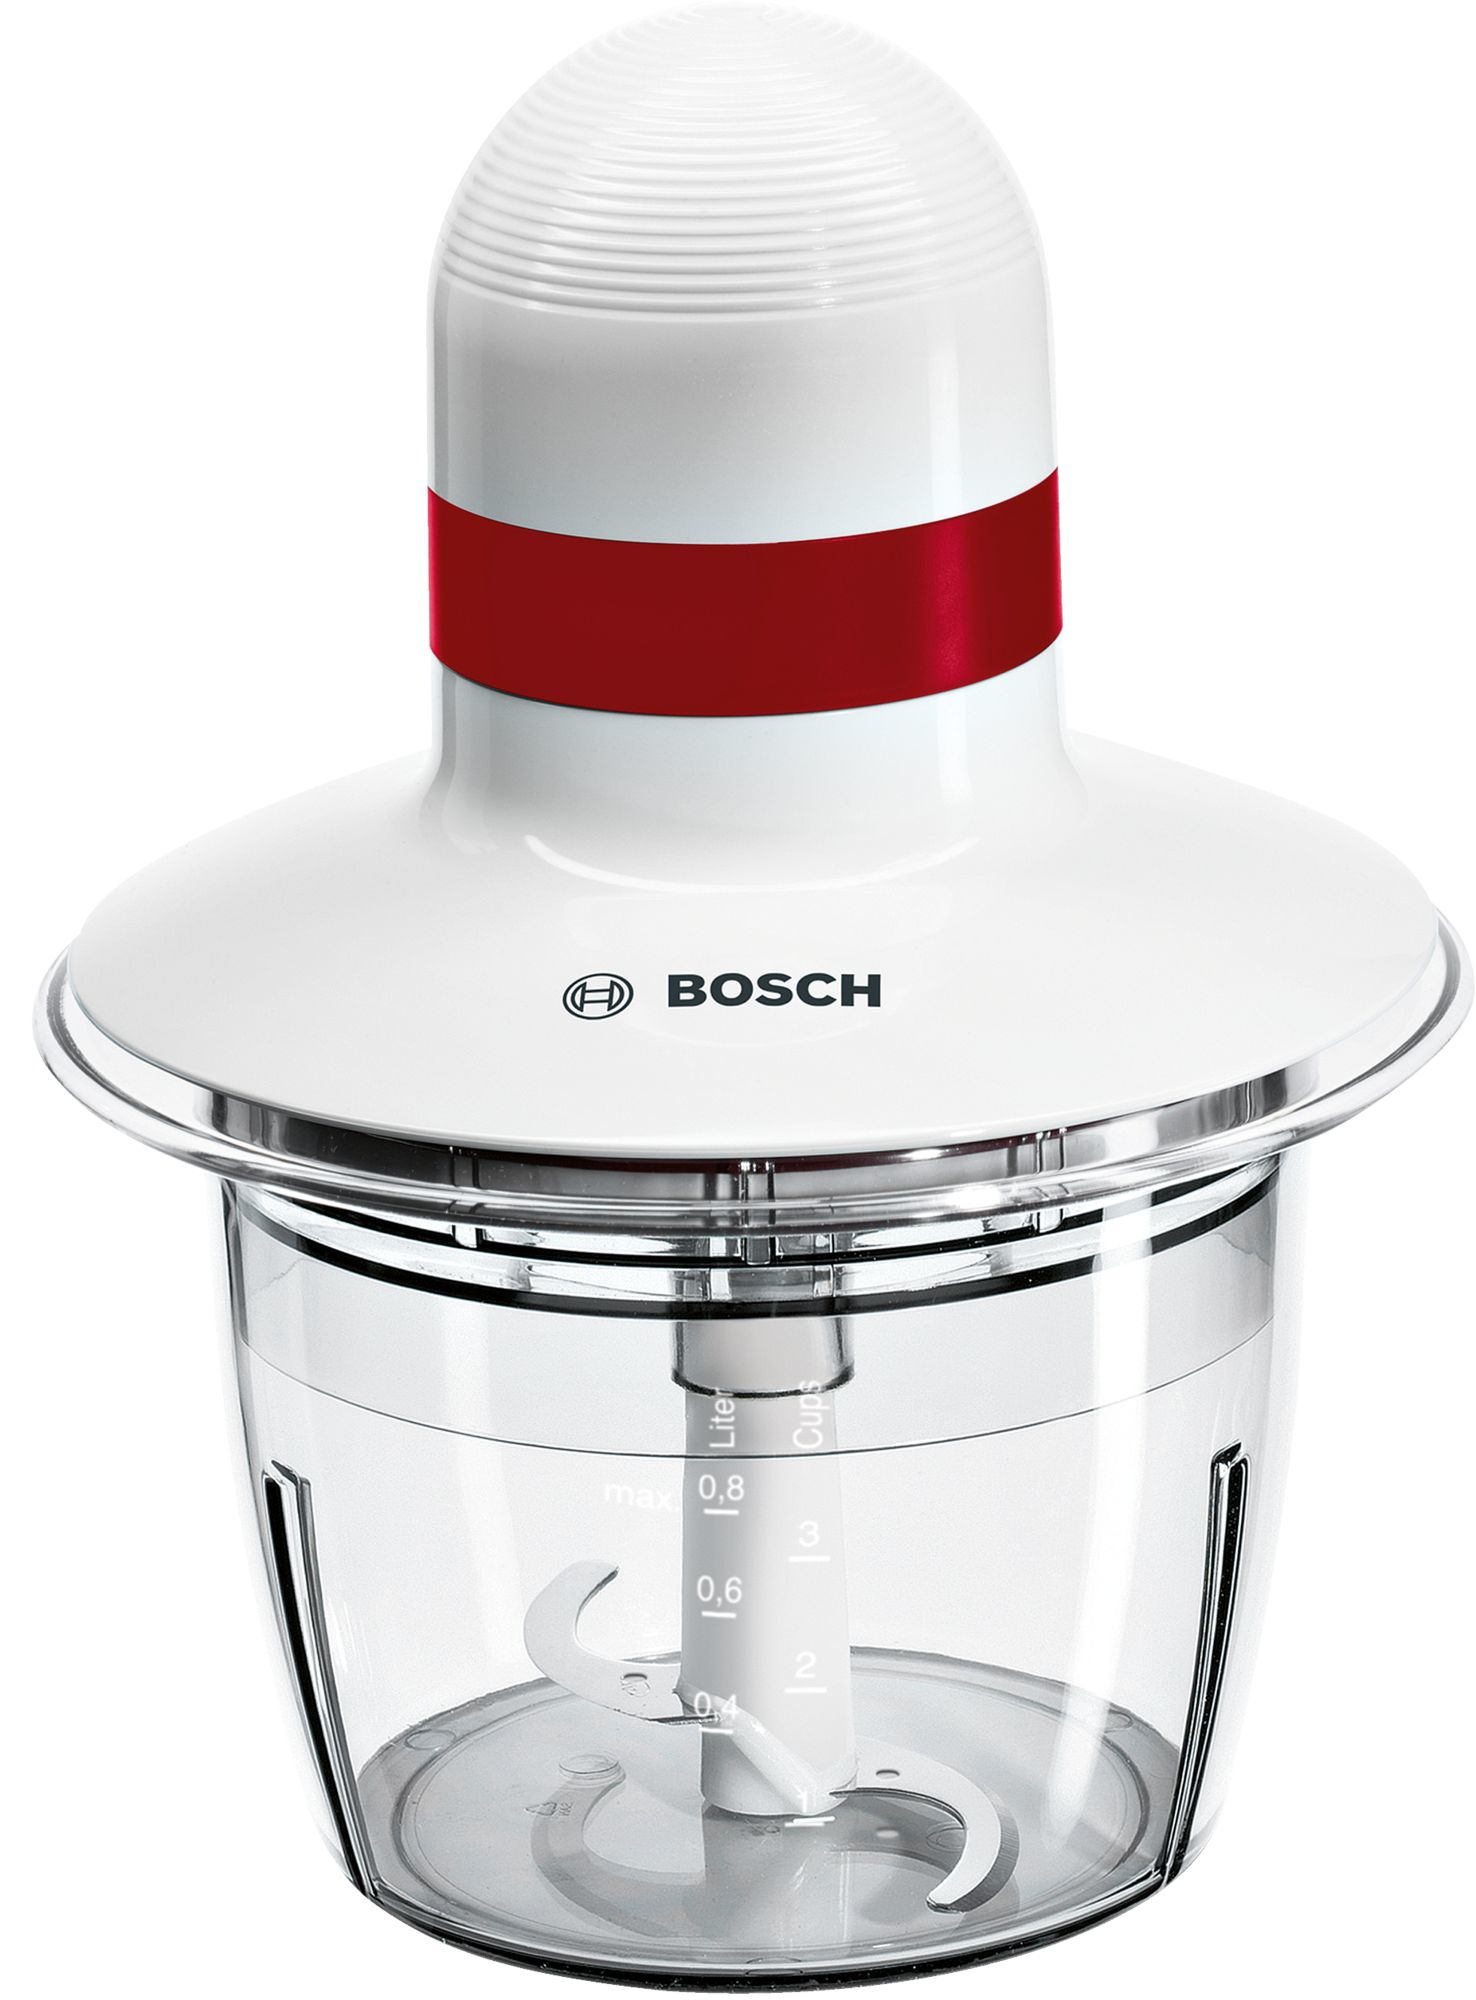 Image of Bosch MMRP1000 tritaverdure elettrico 0,8 L 400 W Rosso, Trasparente, Bianco